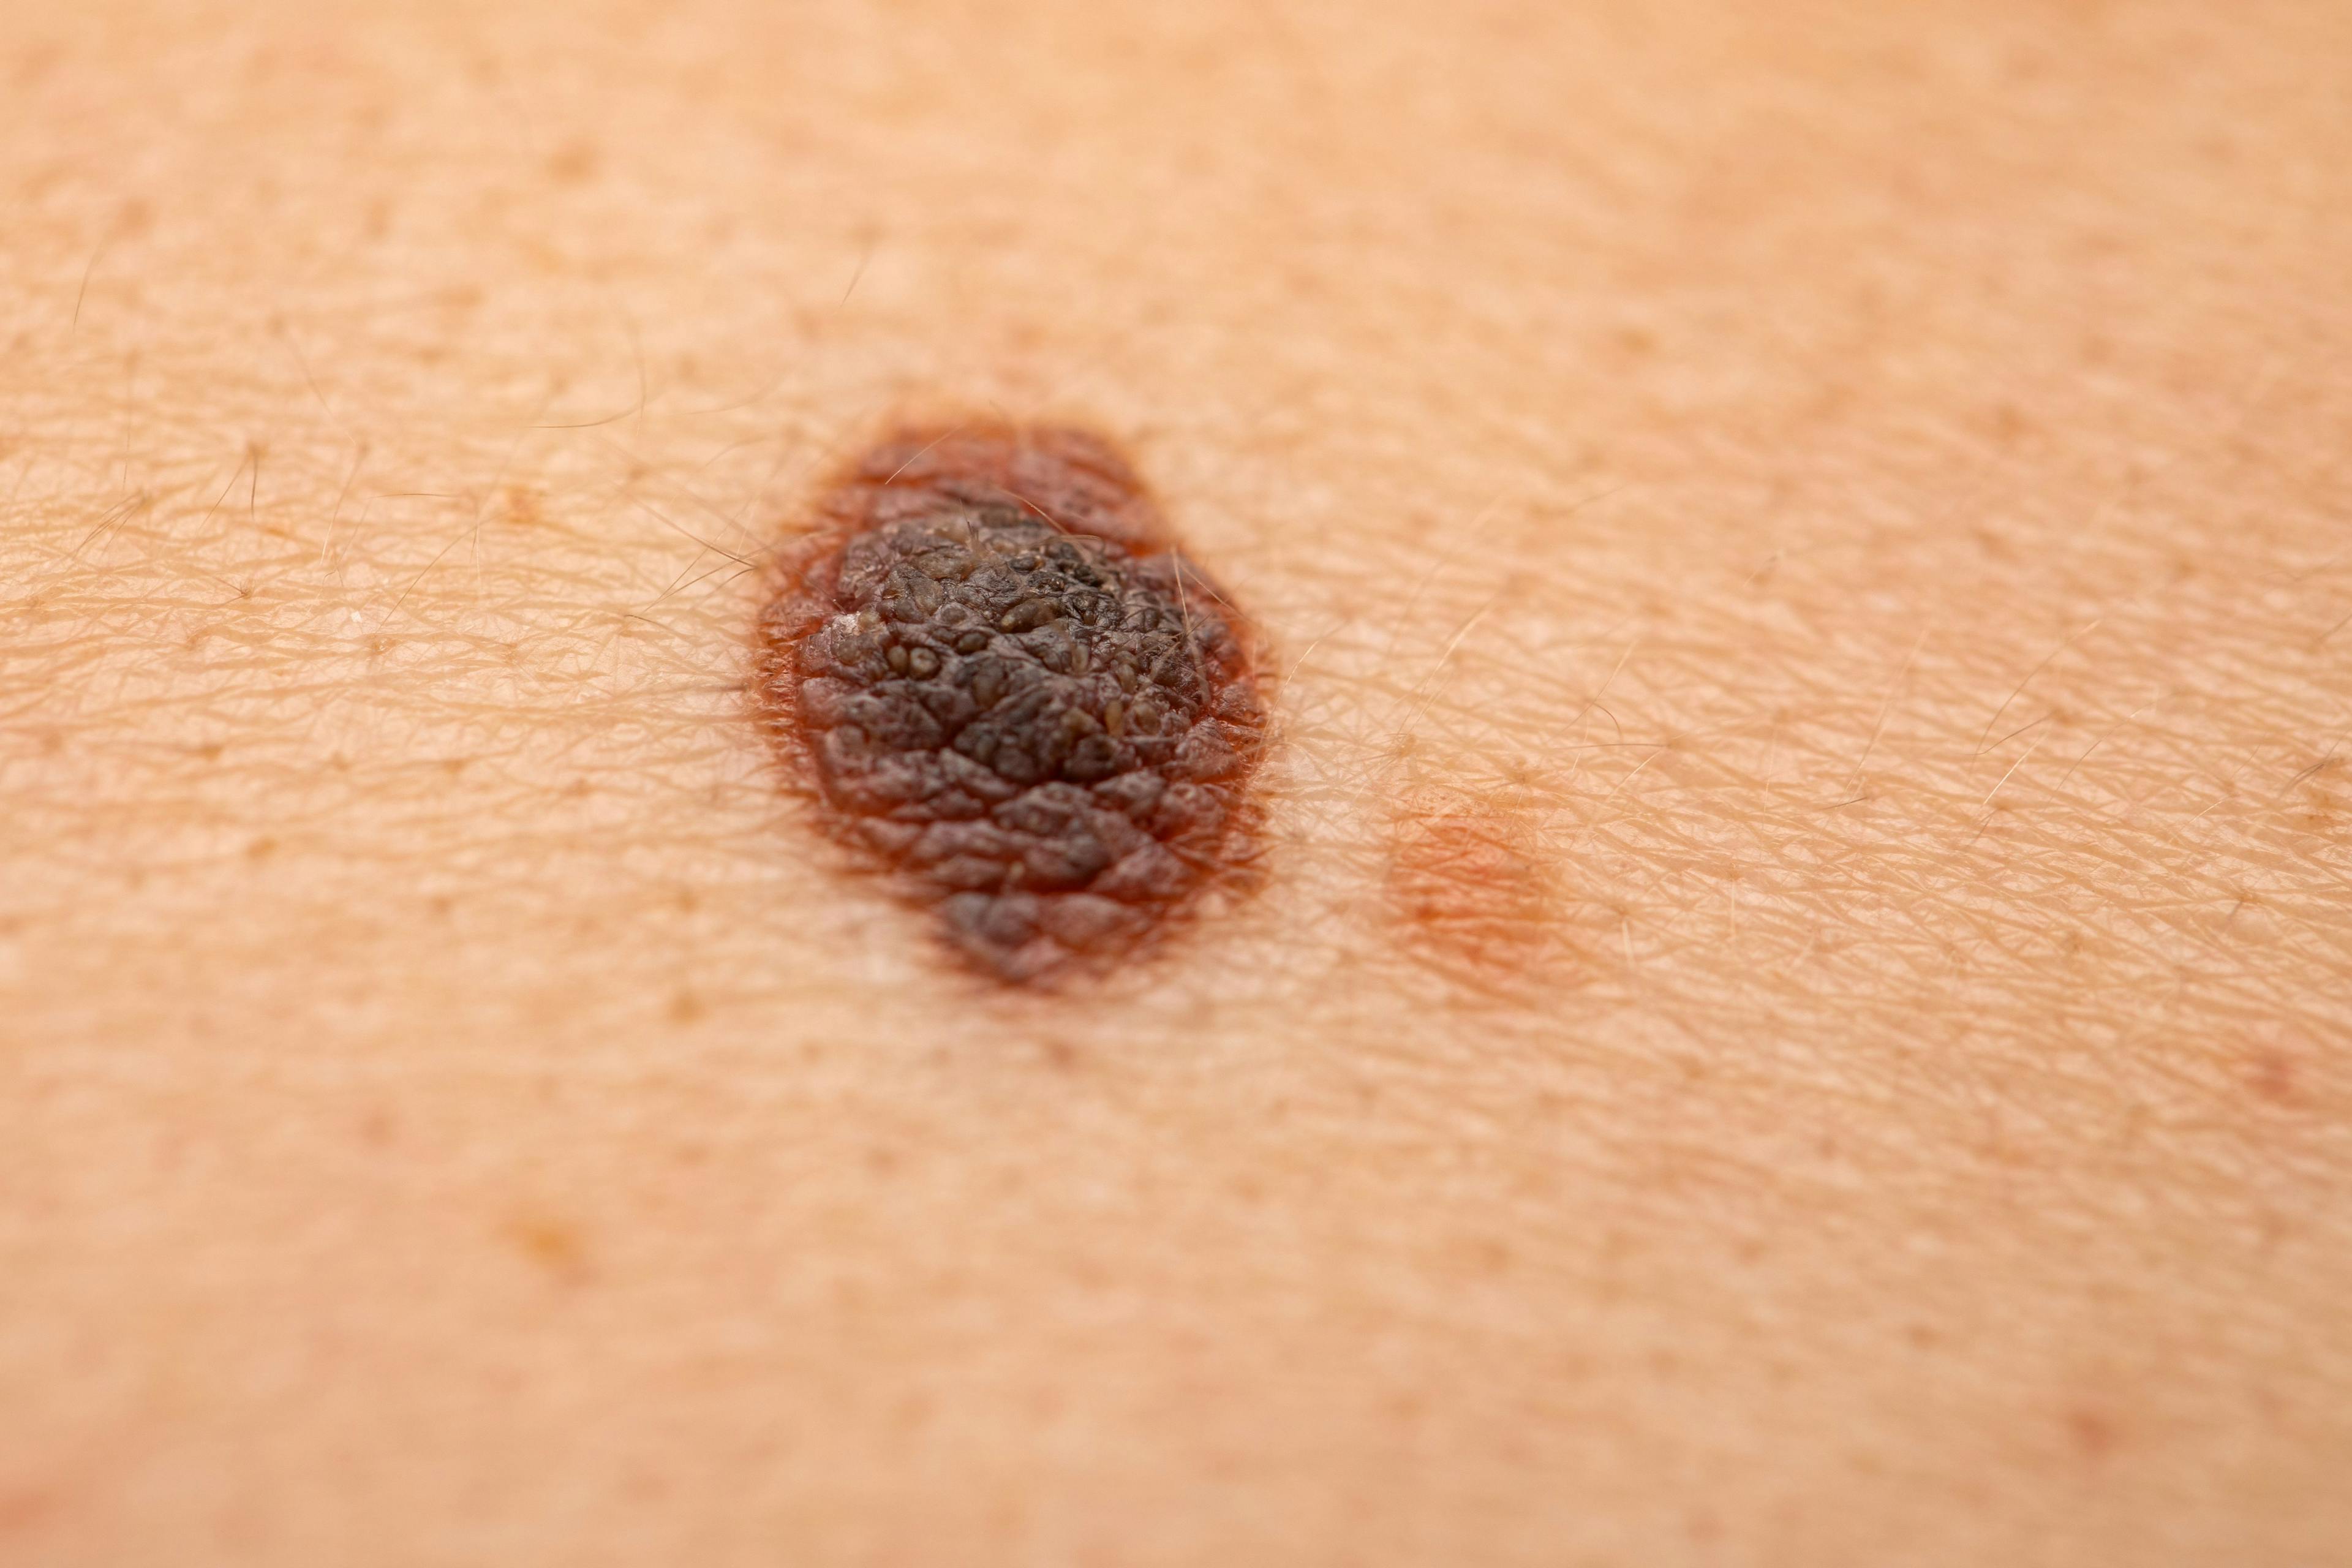 Dangerous nevus on skin - melanoma | Image Credit: Ocskay Mark - stock.adobe.com